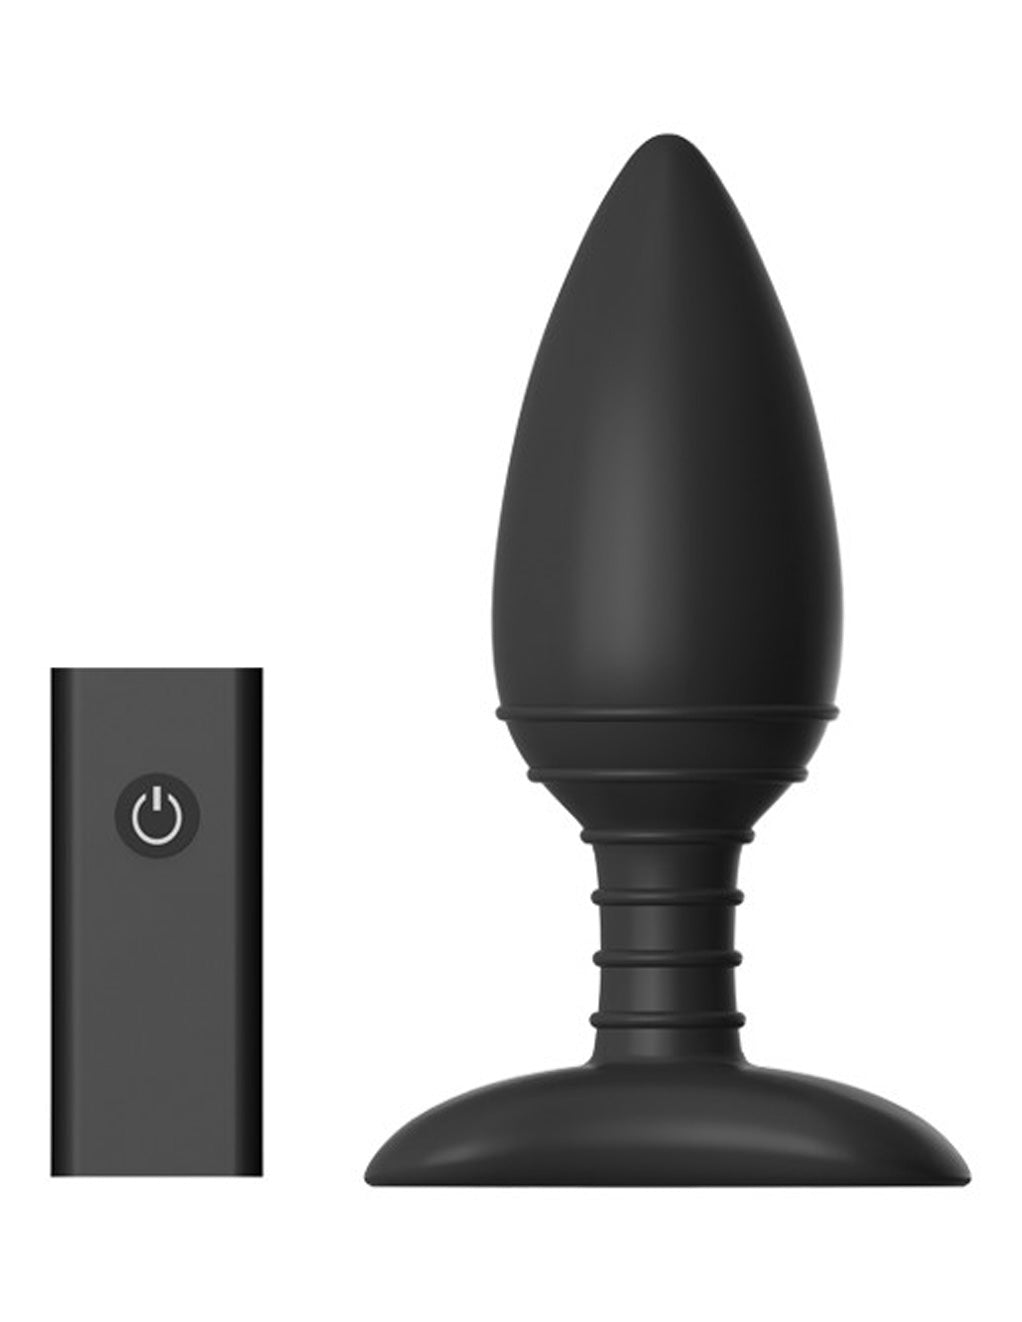 Nexus Ace Medium Vibrating Butt Plug Large Toy With Remote